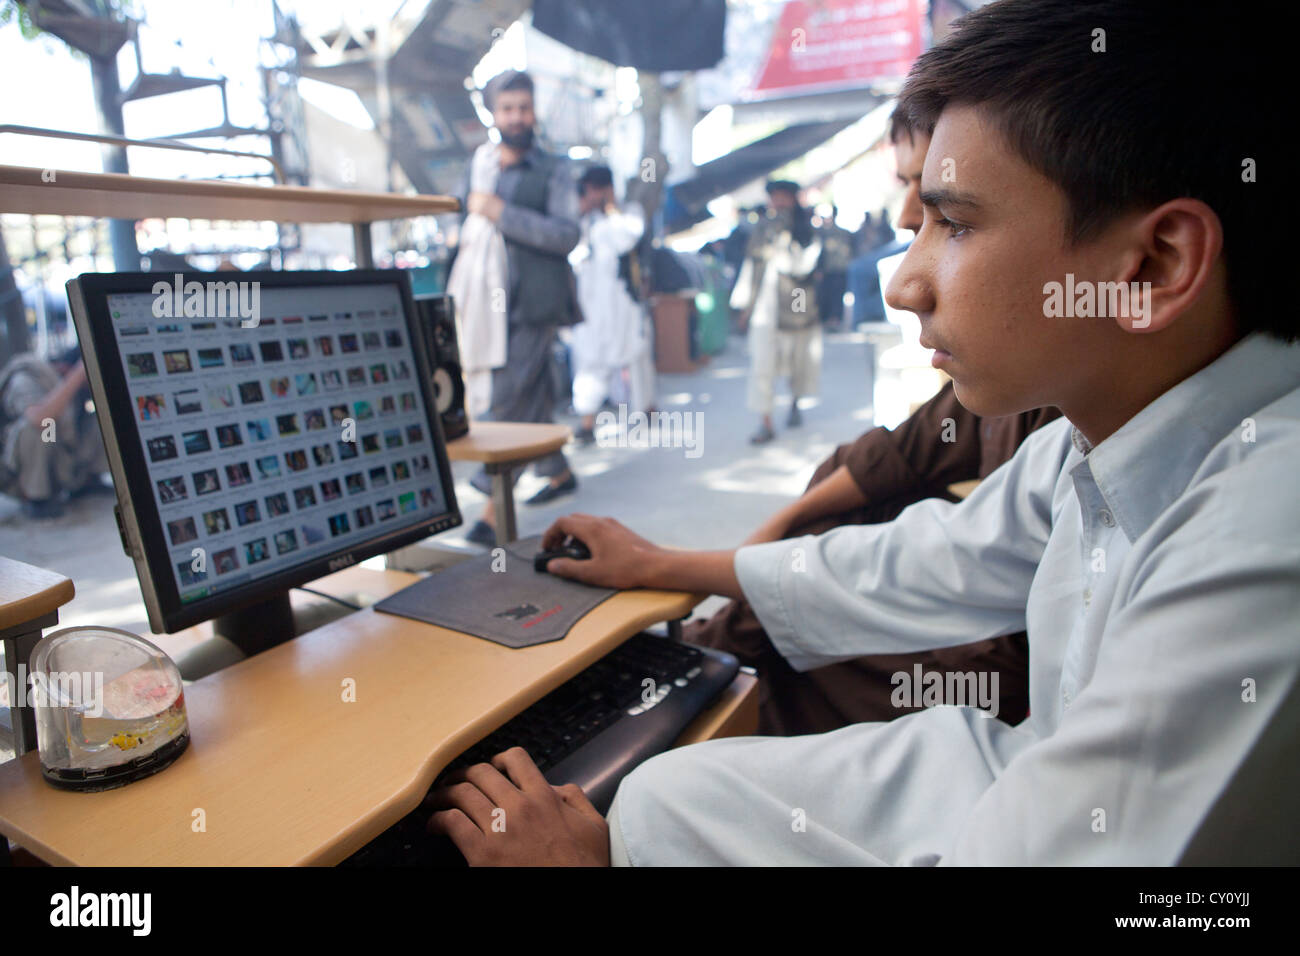 music and movies salesmen in Kunduz, Afghanistan Stock Photo